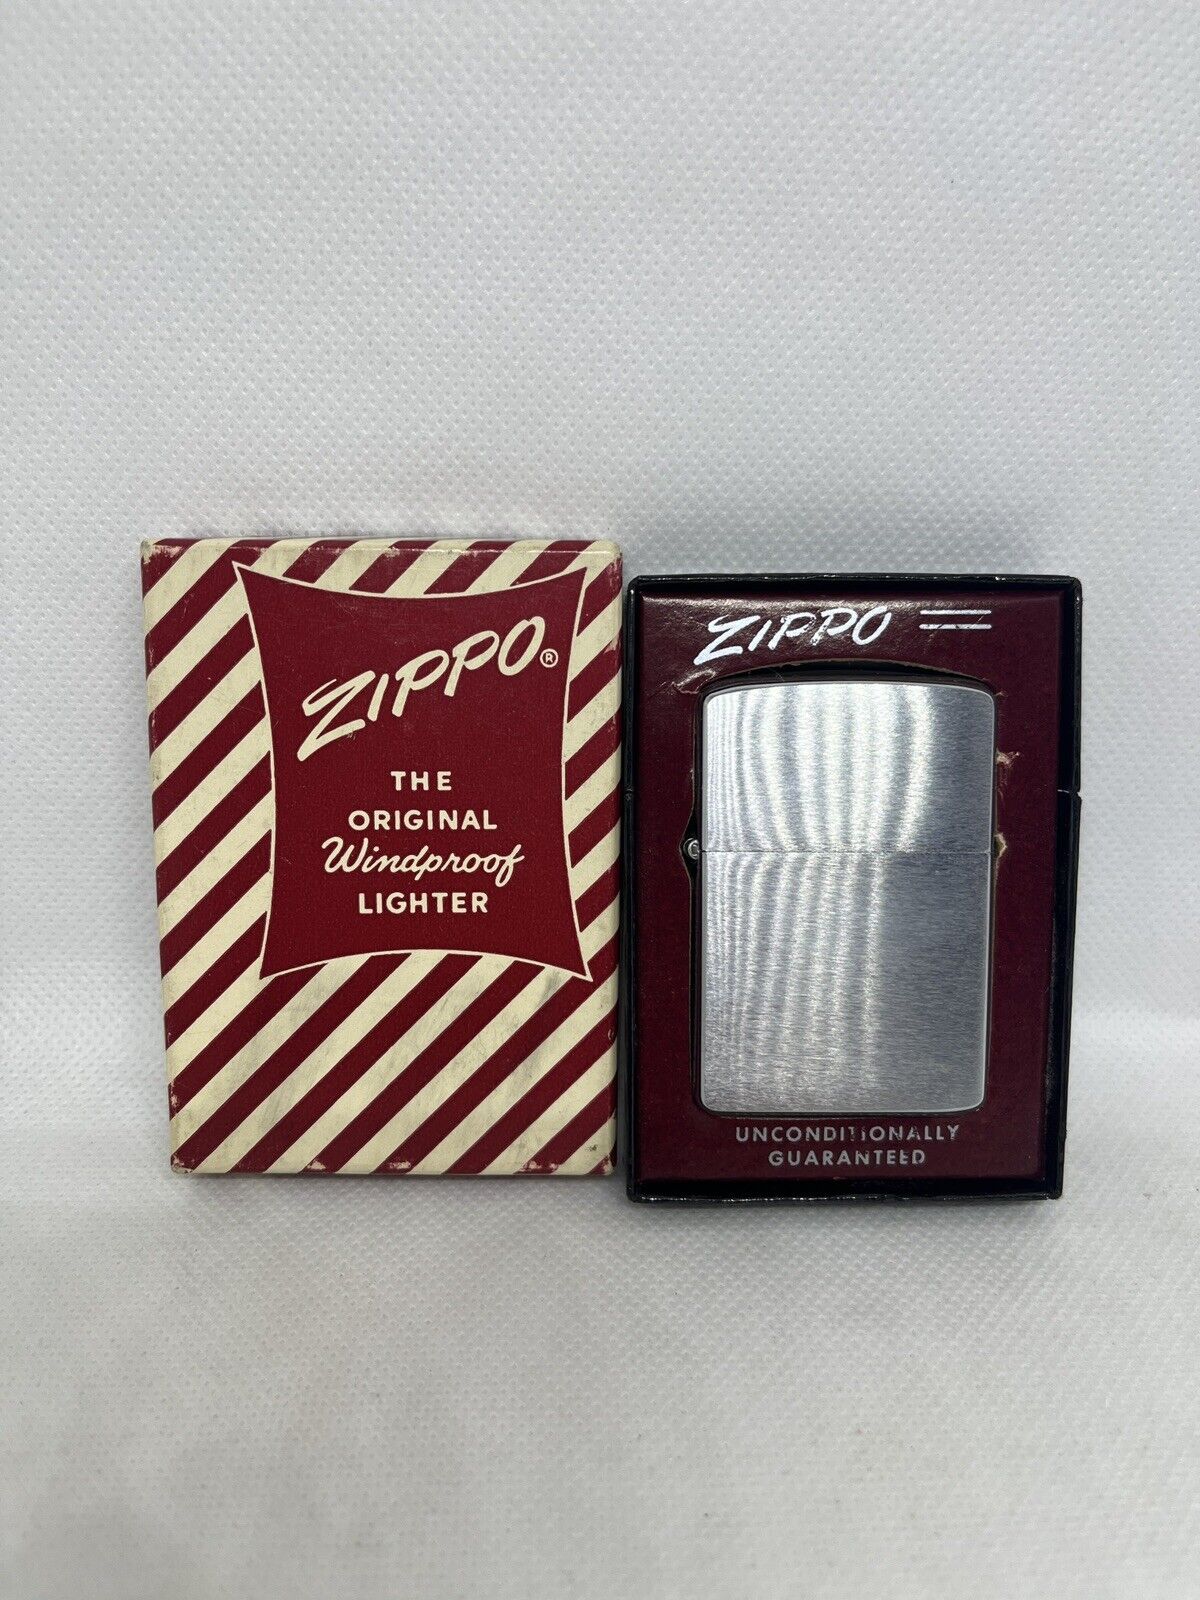 Vintage zippo lighter no. 200 brush finish vintage 1958 new